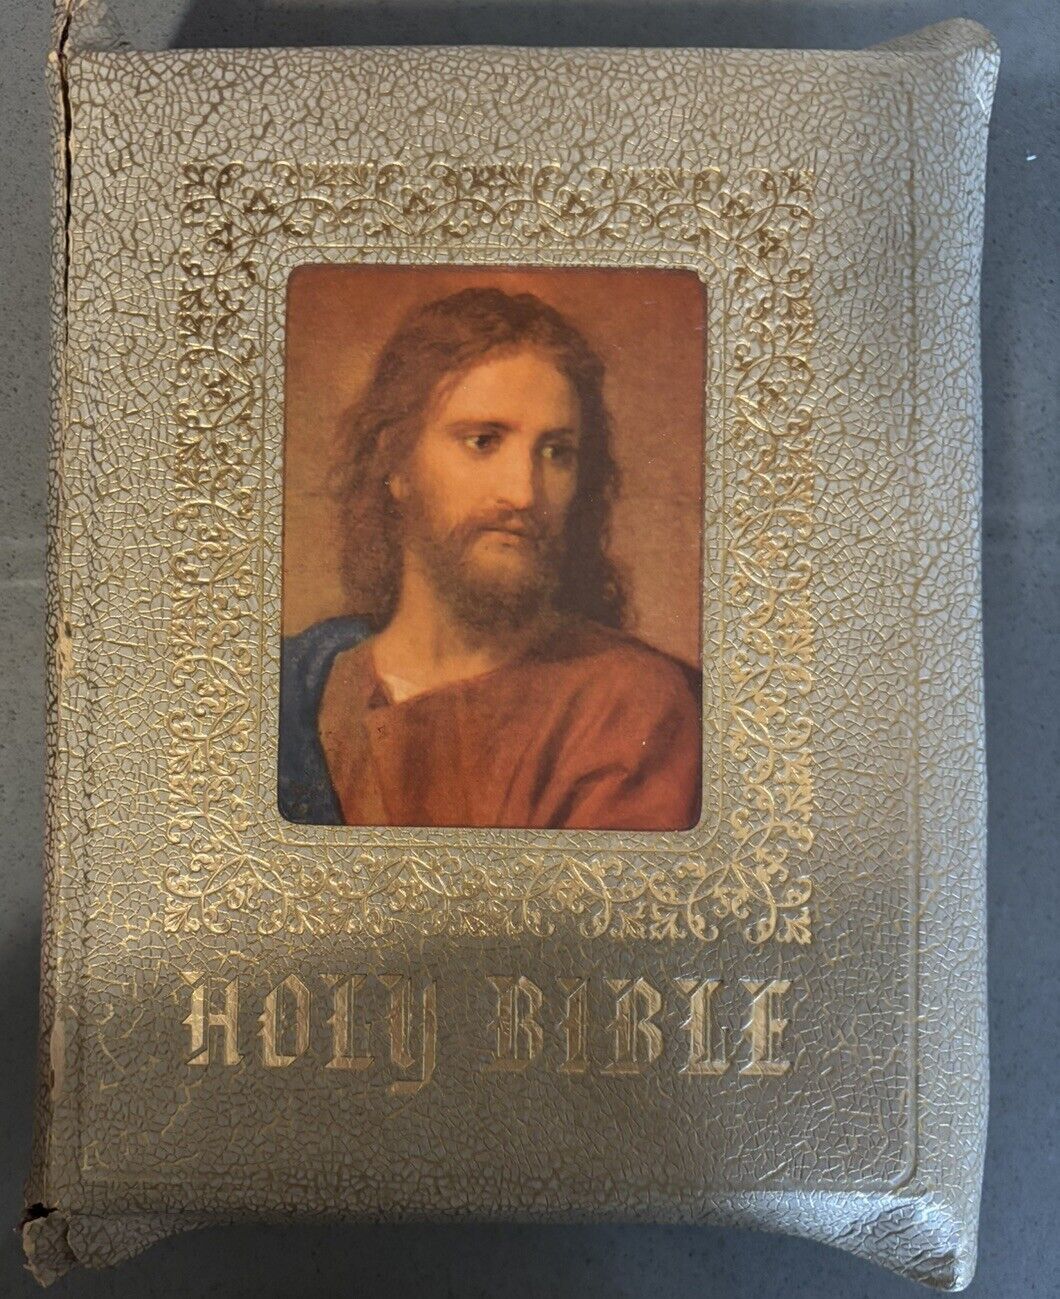 VTG 1958 Holy Bible Clarified Edition Illustrated Gold KJV Good Savior Edition